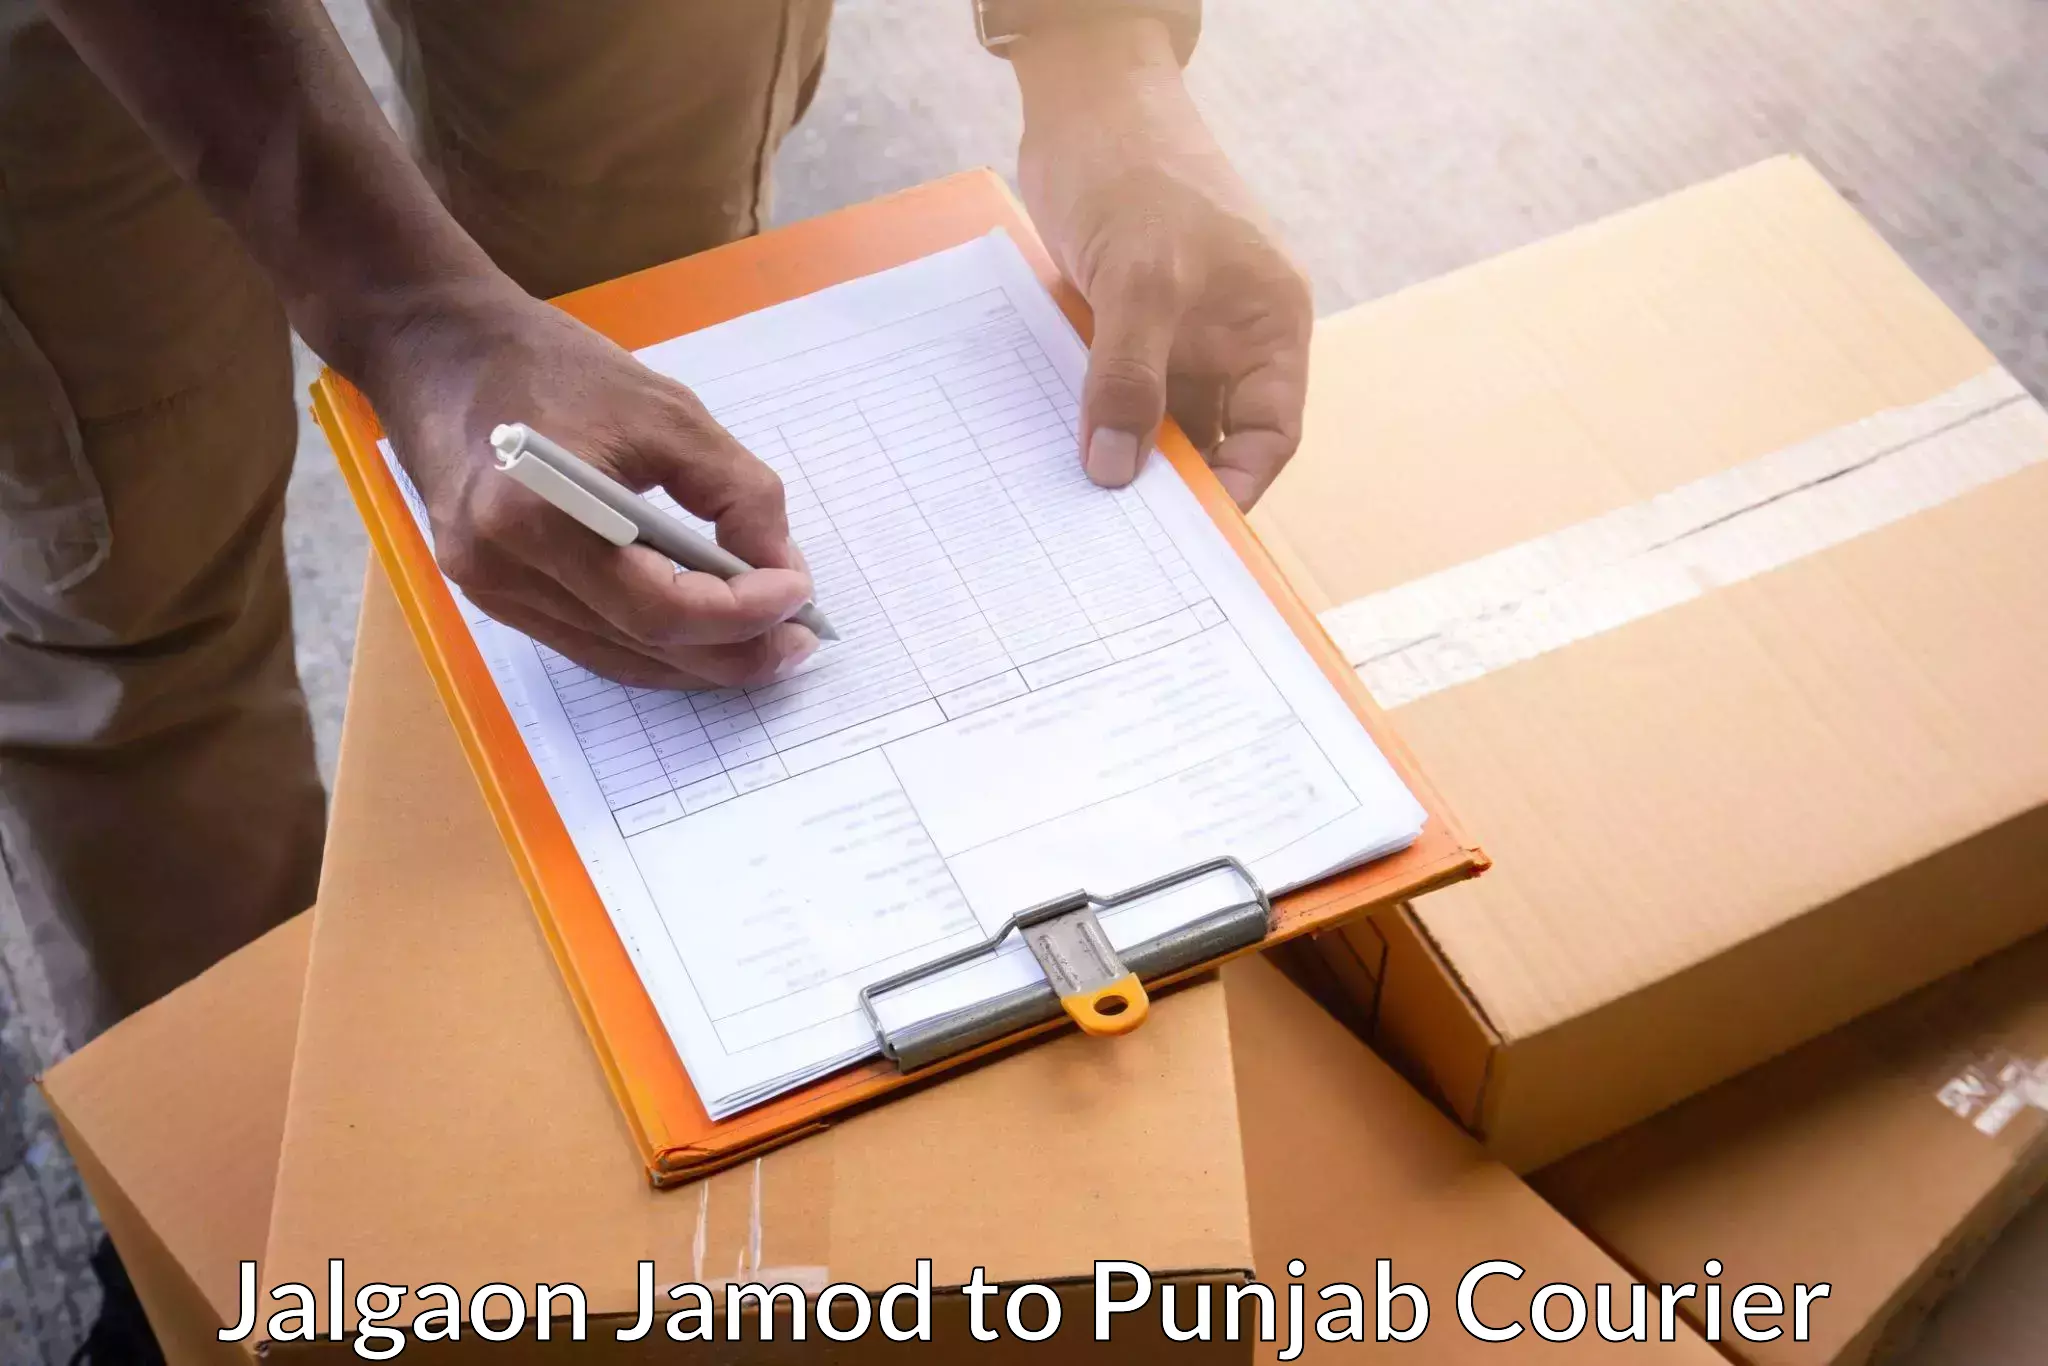 Reliable logistics providers Jalgaon Jamod to Zirakpur